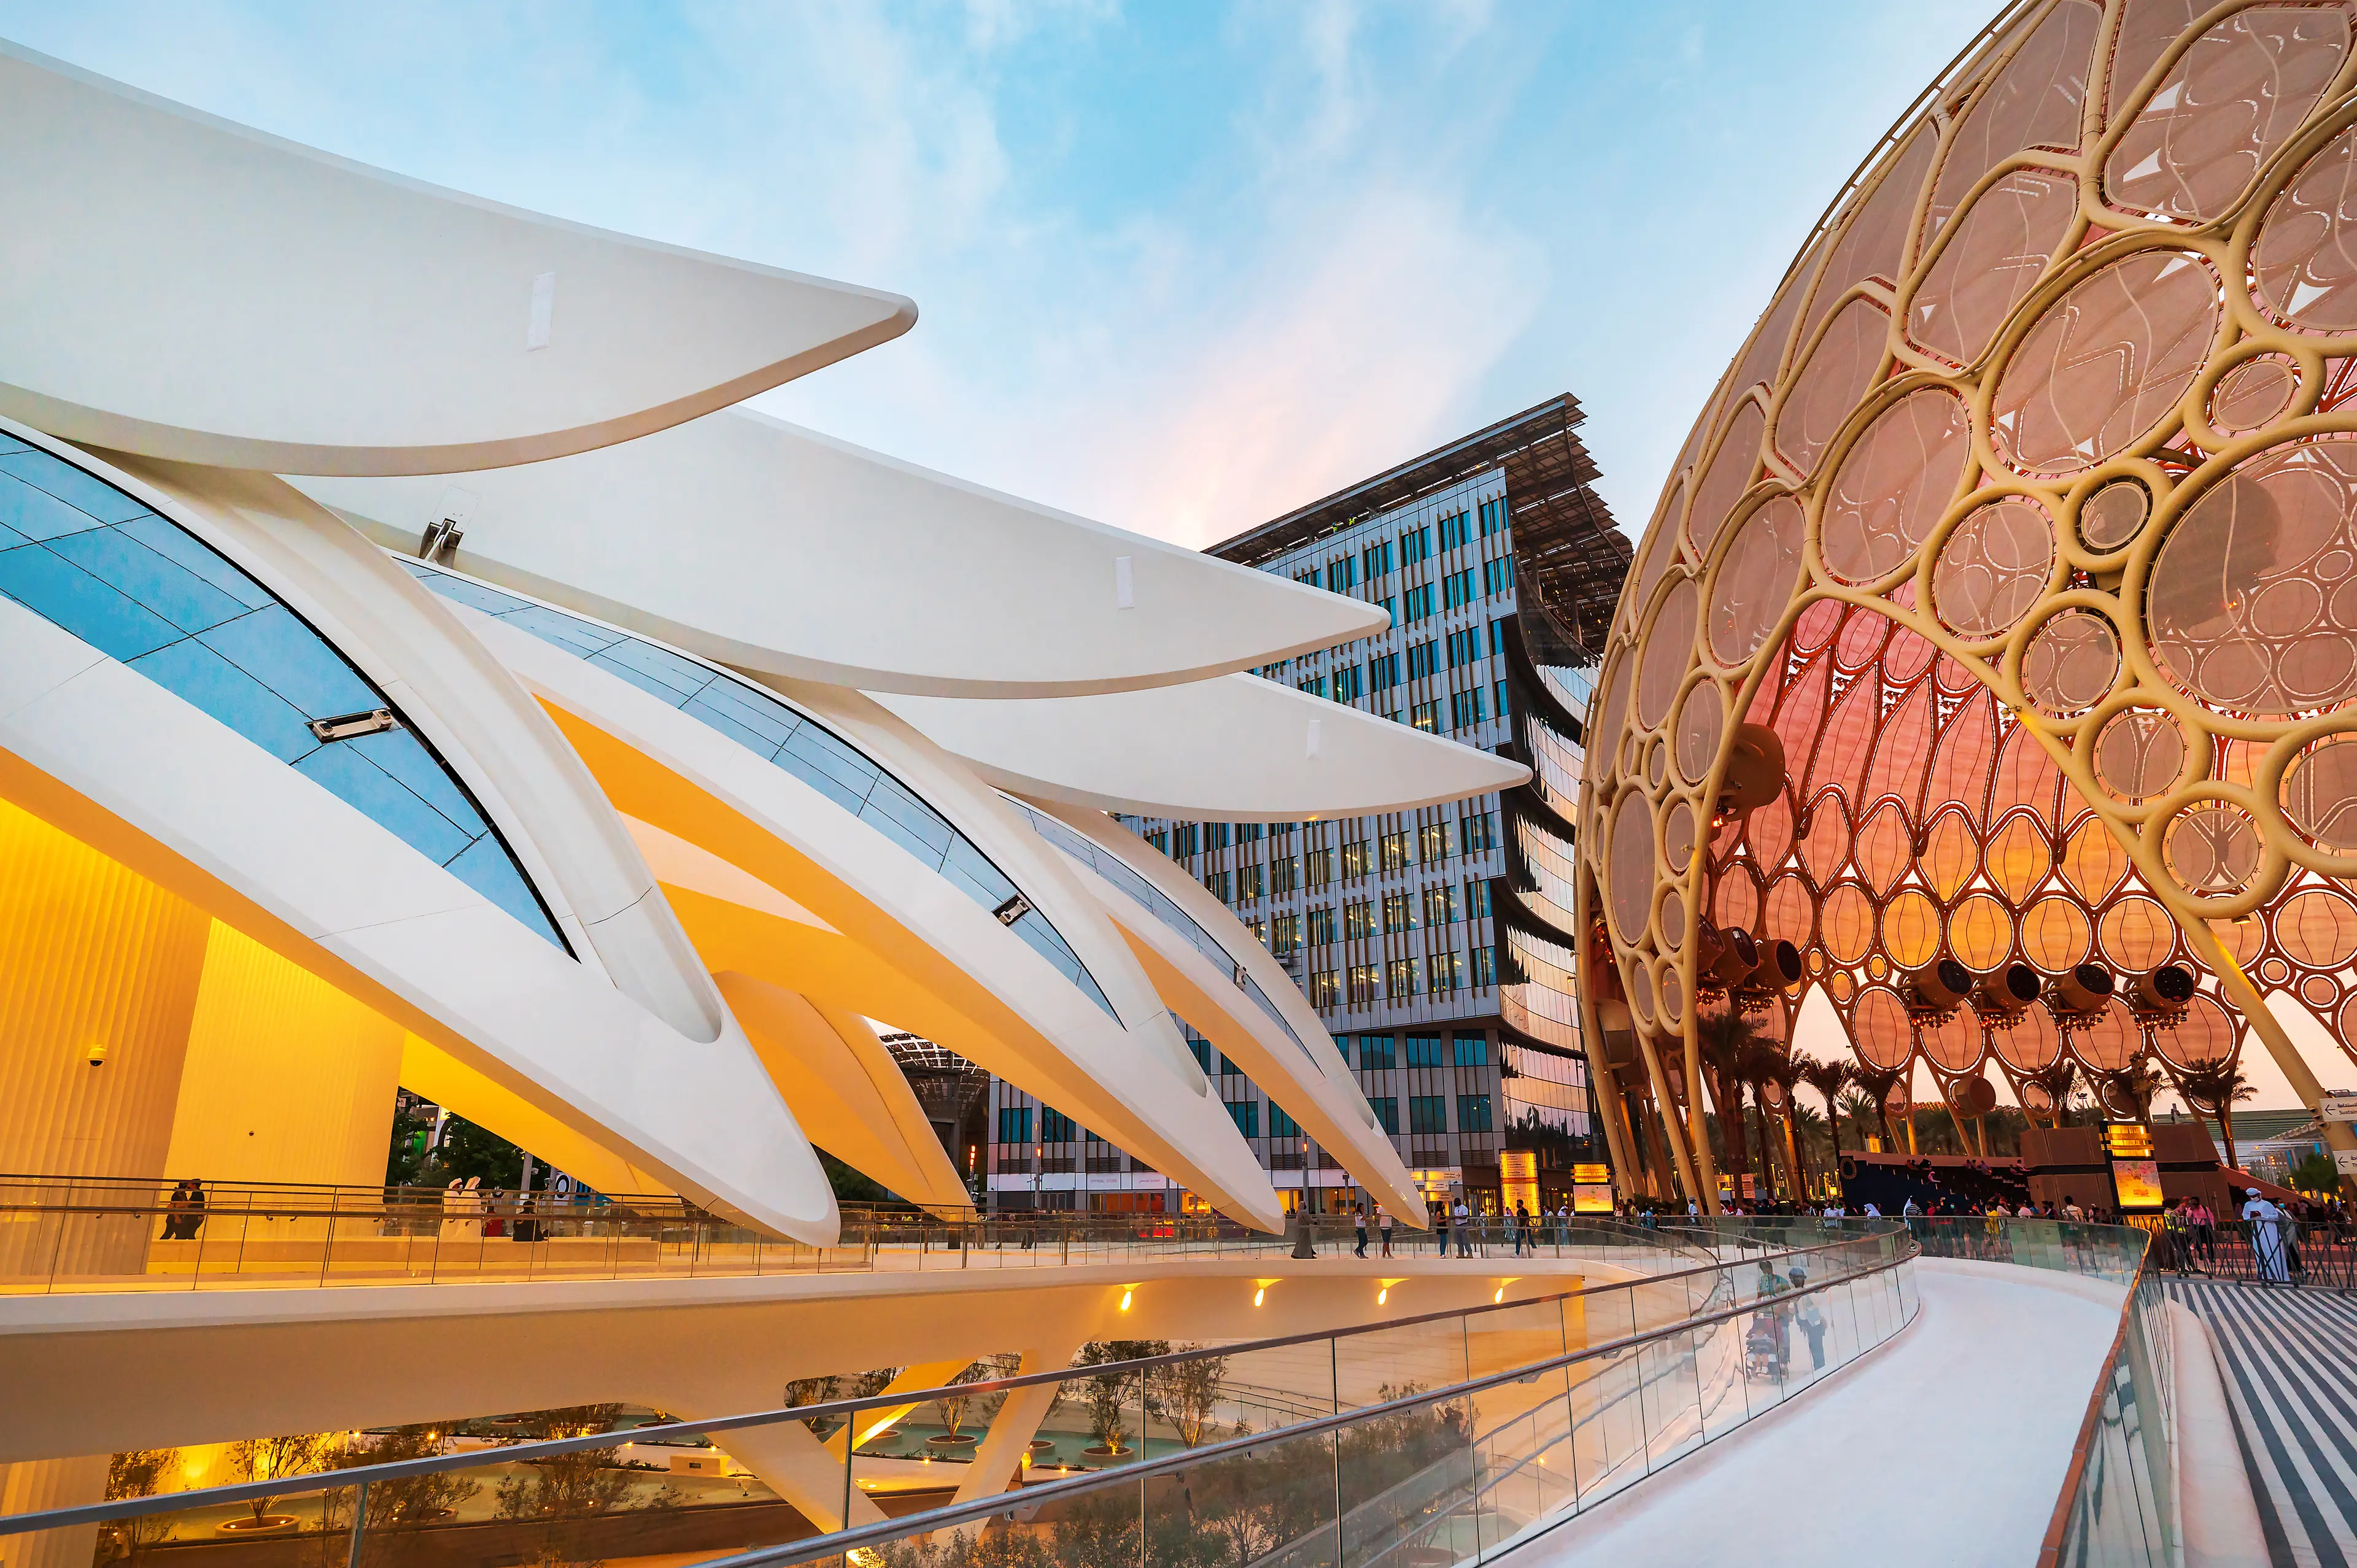 United Arab Emirates Pavilion with Al Wasl Plaza